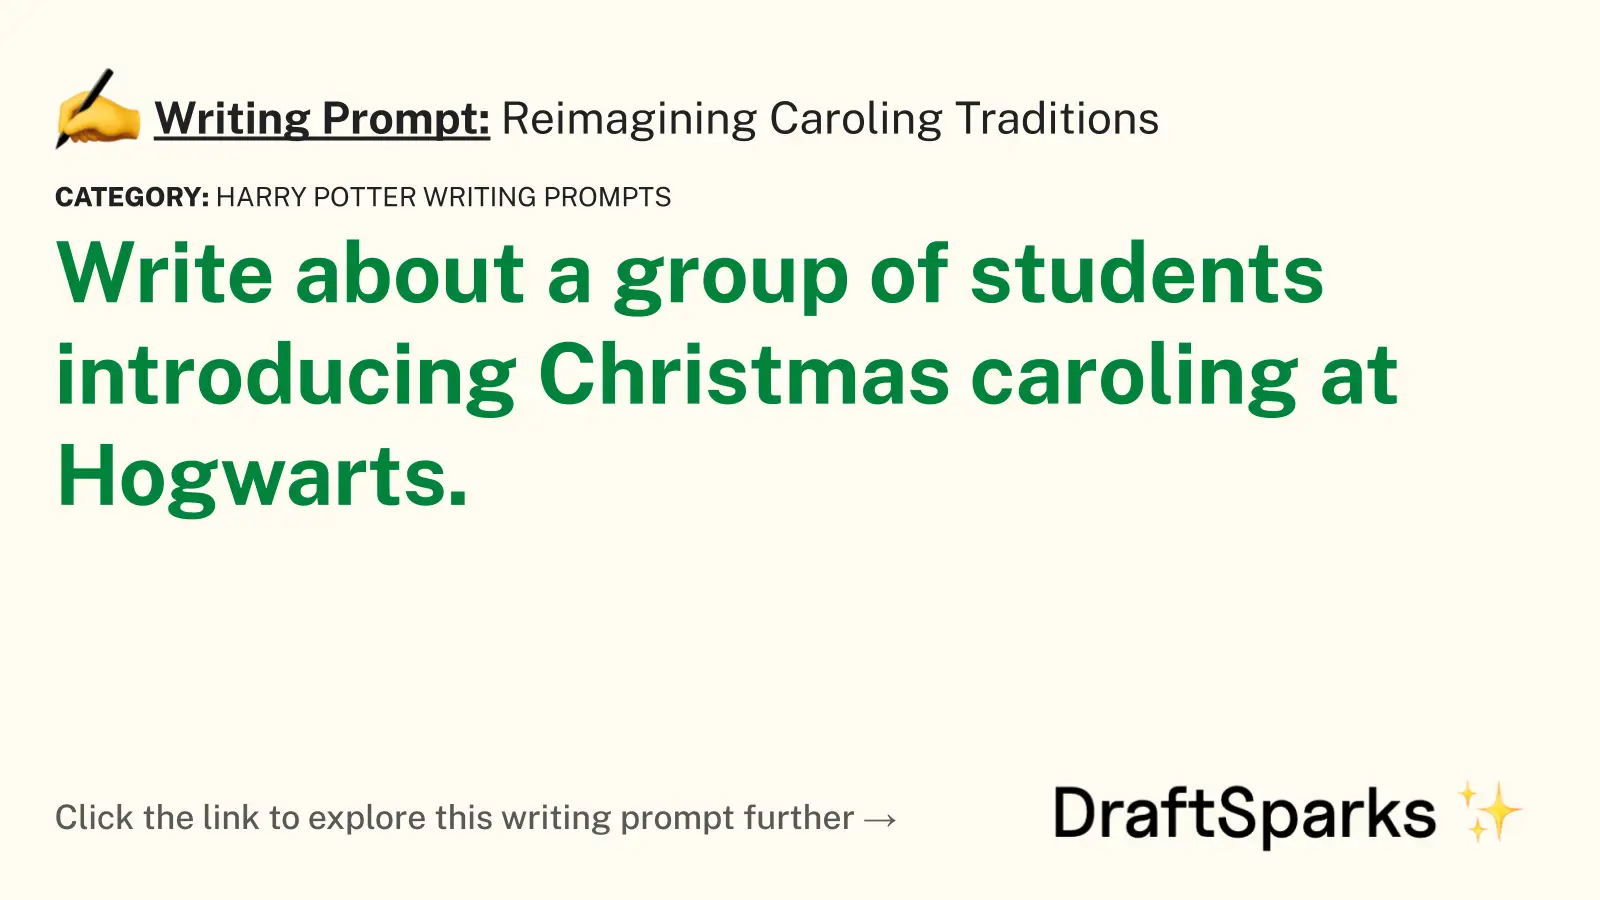 Reimagining Caroling Traditions